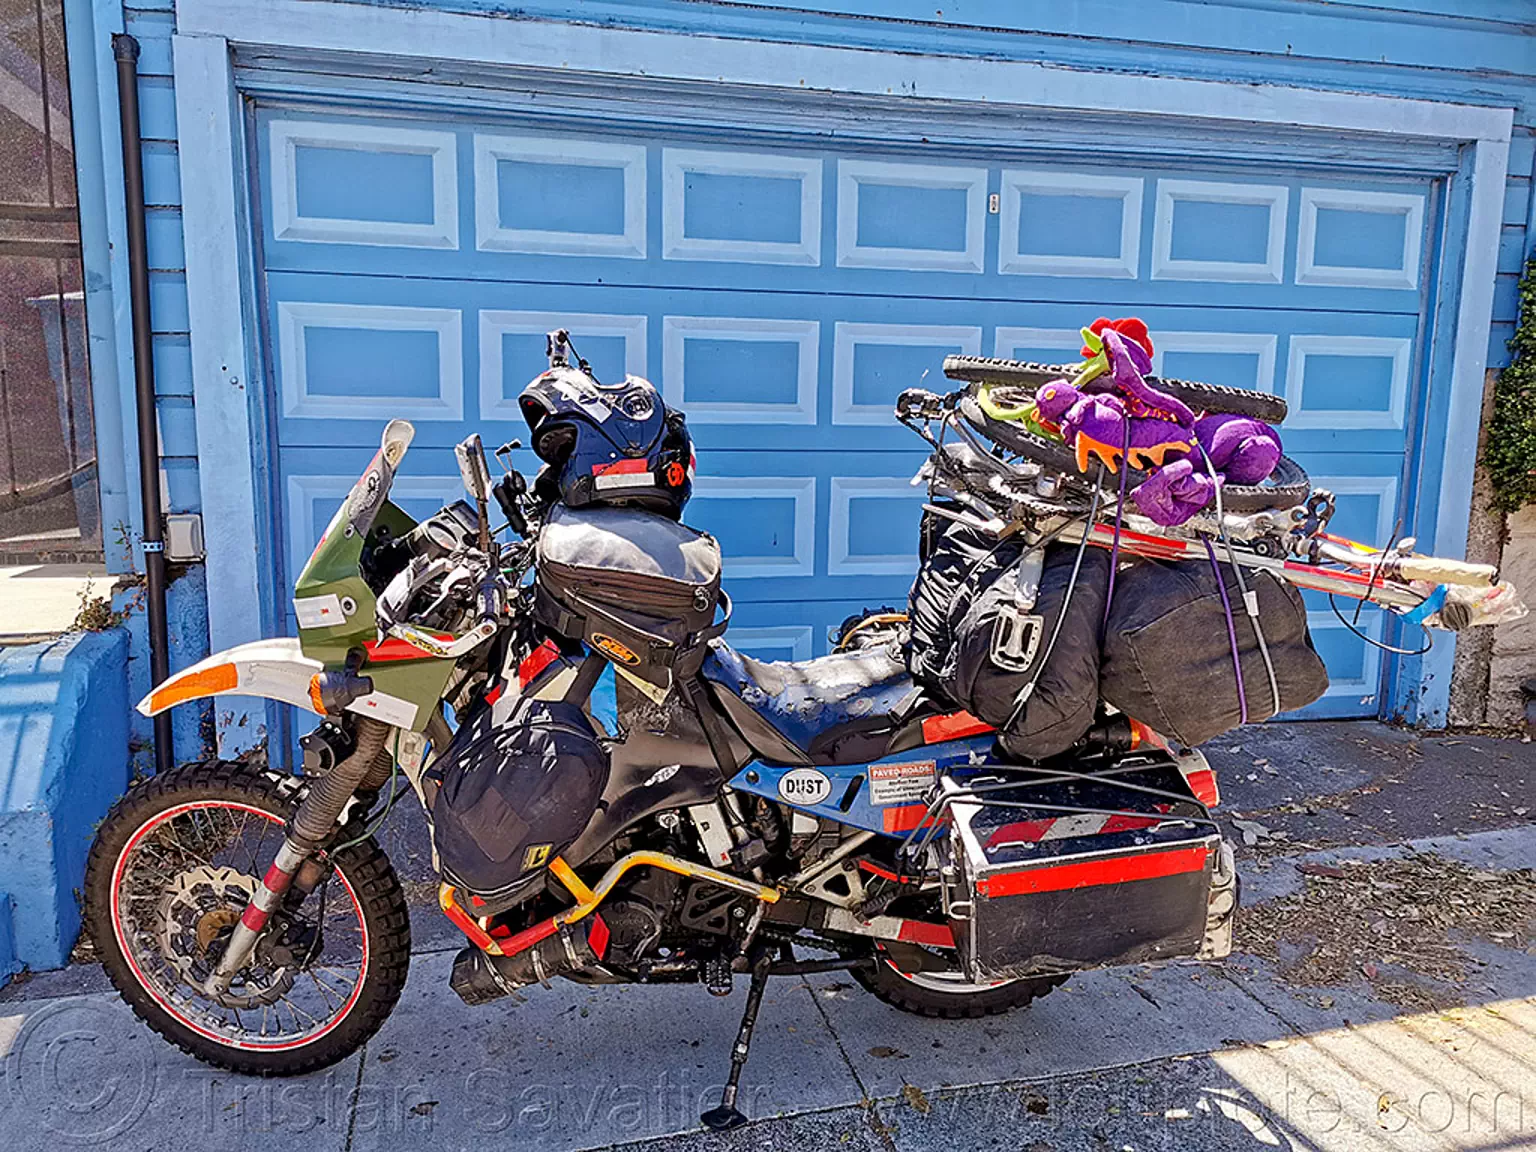 KLR 650 - burning man 2019, burning man, klr 650, loaded, luggage, motorcycle, overloaded, packed, panniers